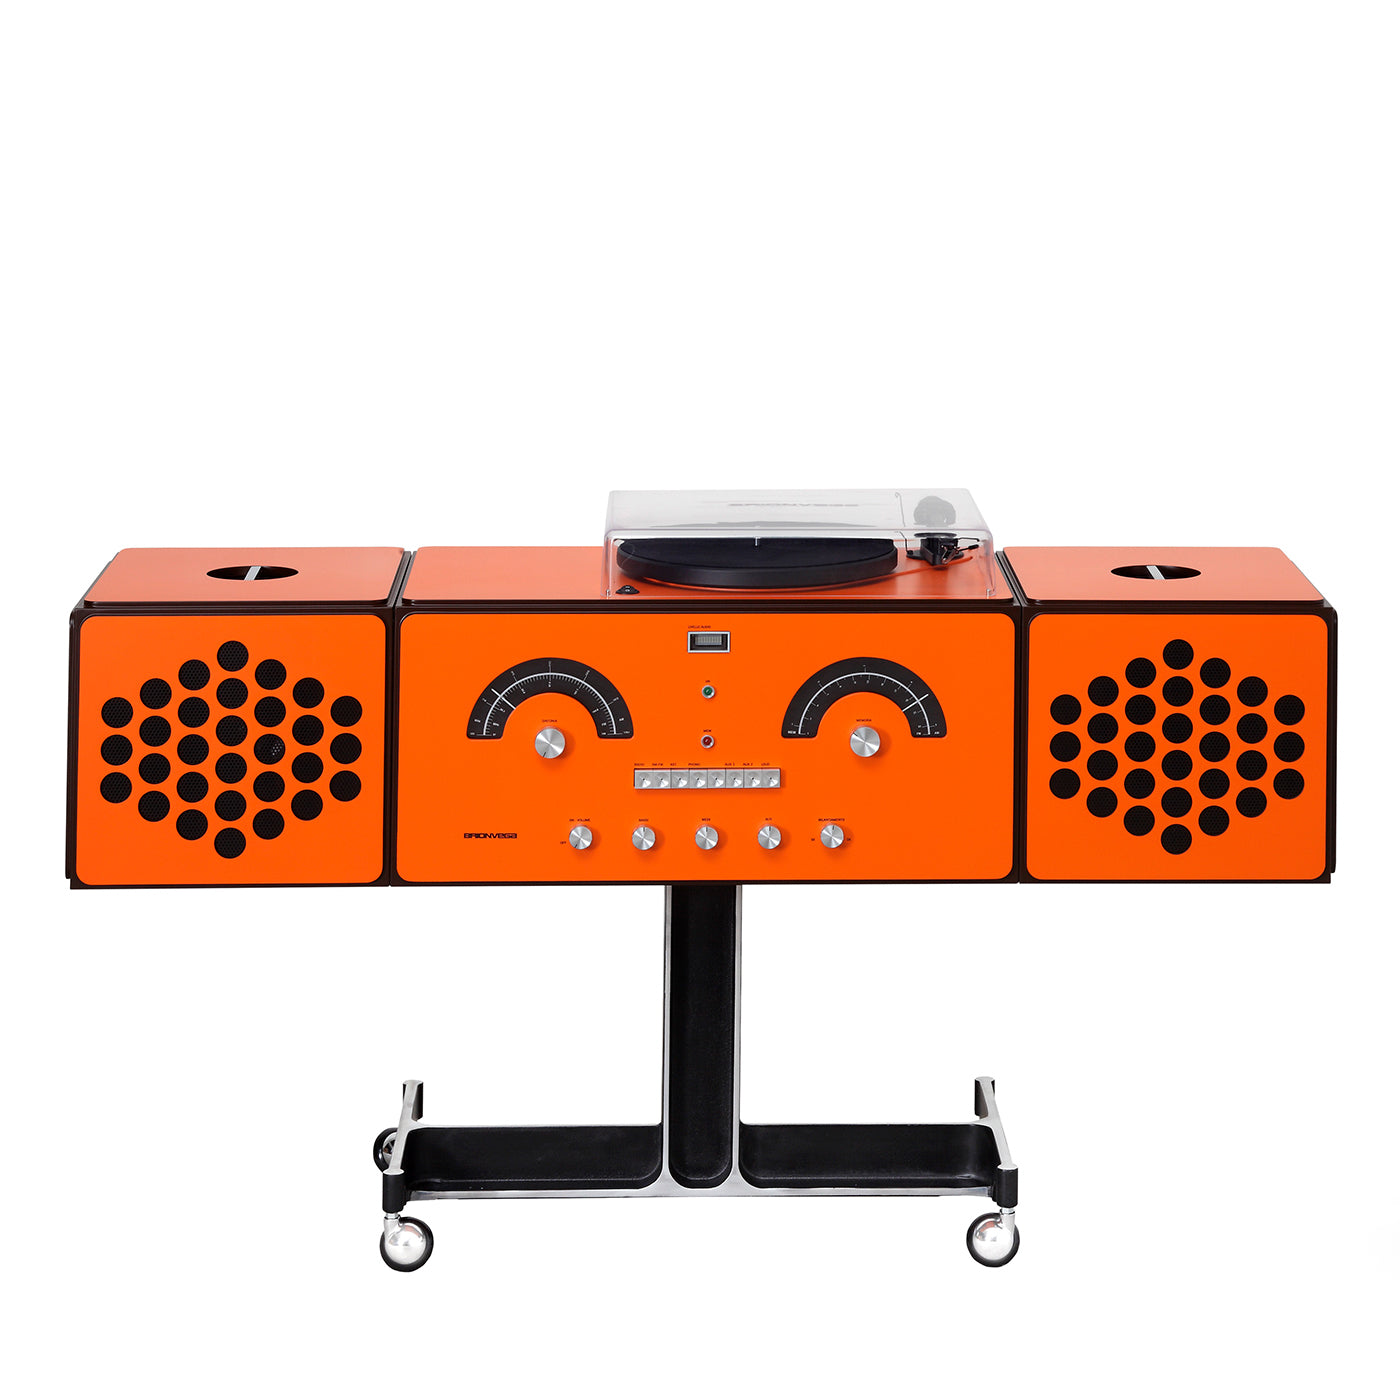 Radiofonografo RR226 naranja de Achille y Pier Giacomo Castiglioni - Vista principal